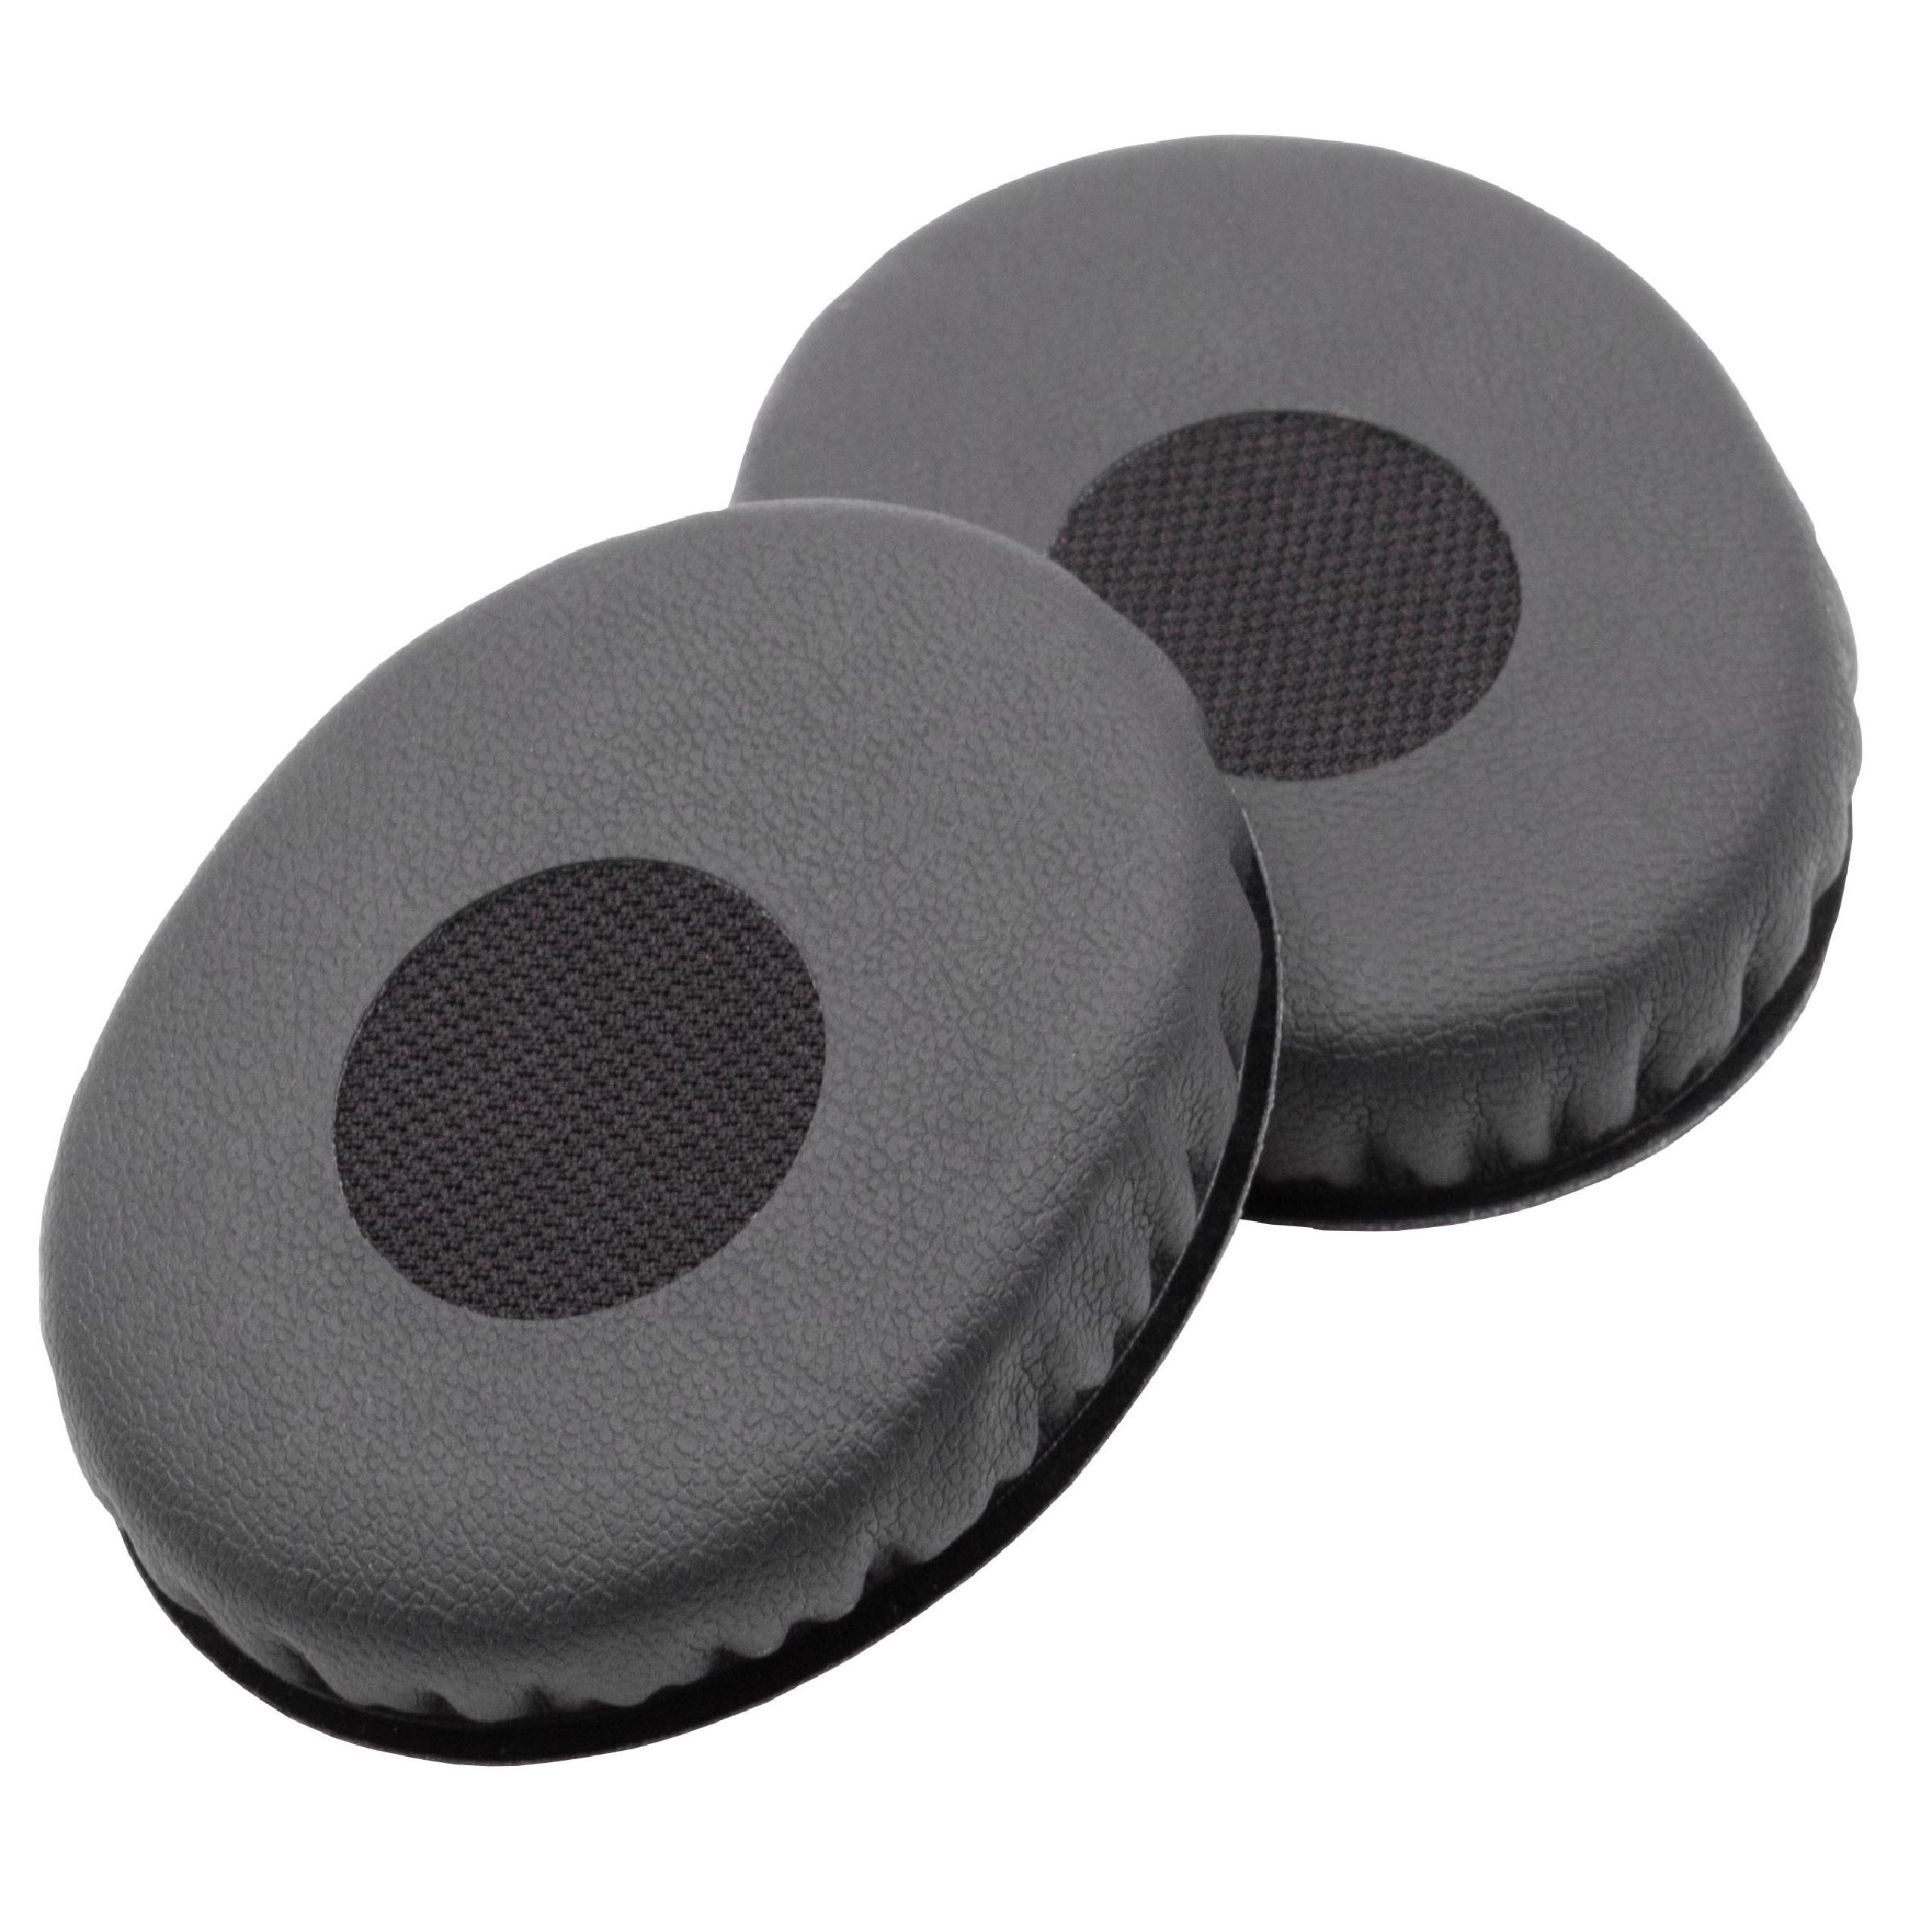 Ear Pads suitable for Sennheiser HD218 Headphones etc. - polyurethane / foam, 11 mm thick